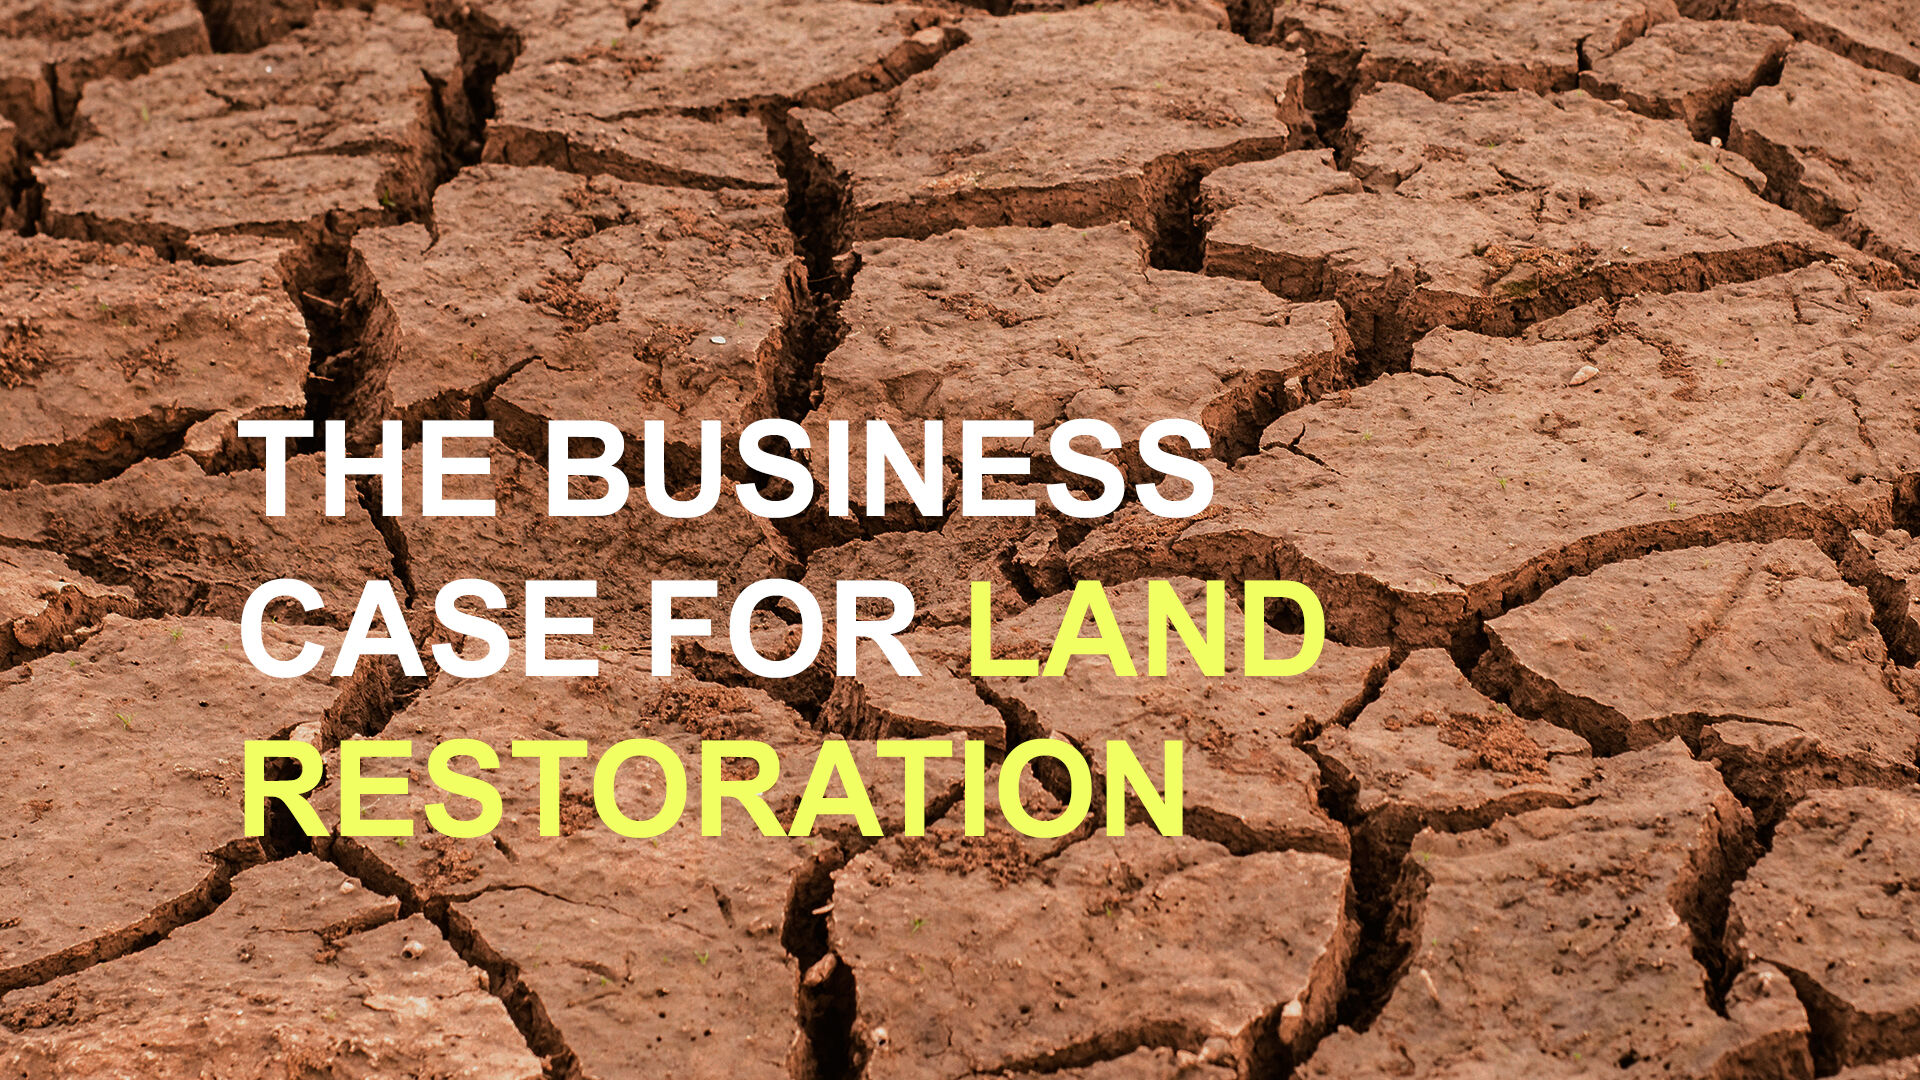 The business case for land restoration